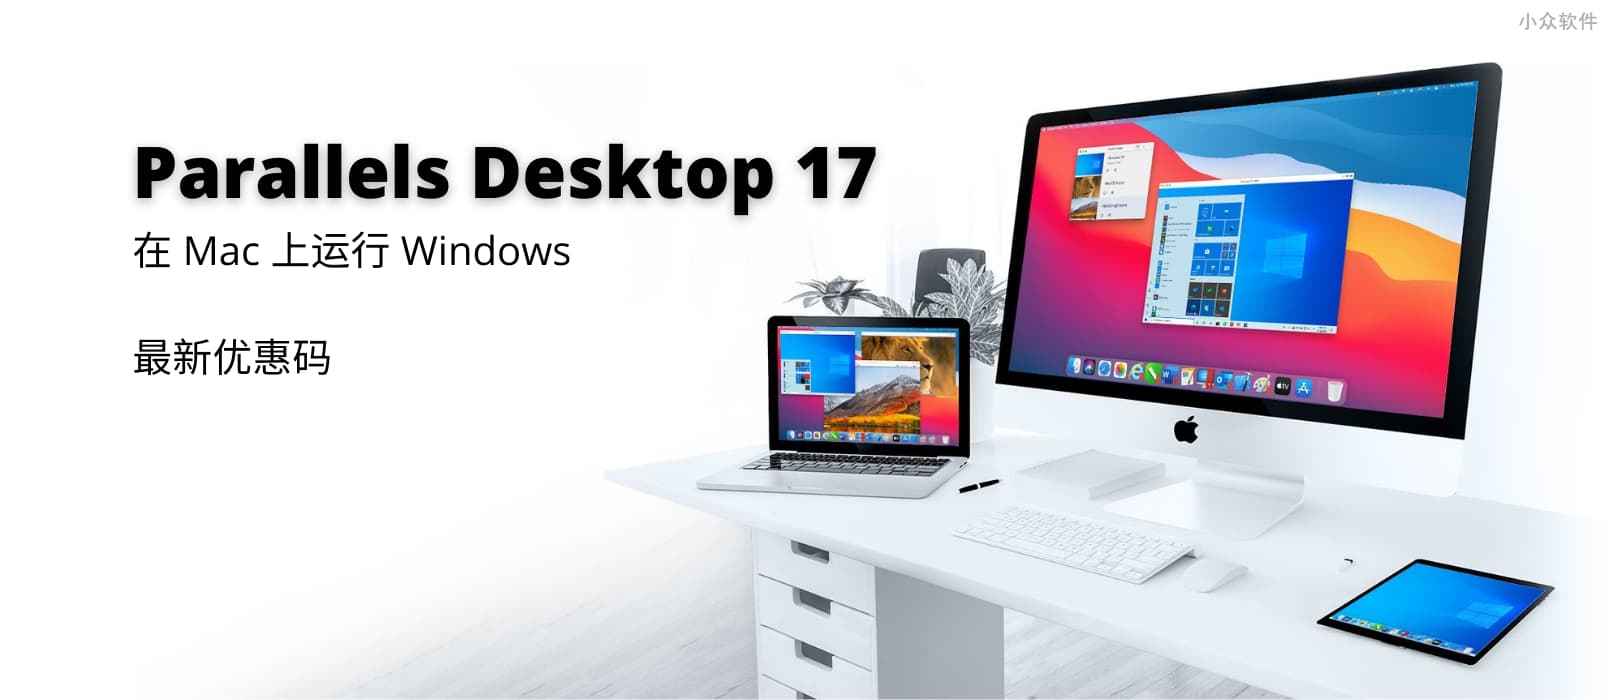 Parallels Desktop 17 最新优惠码：在 Mac 上运行 Windows 的虚拟机软件